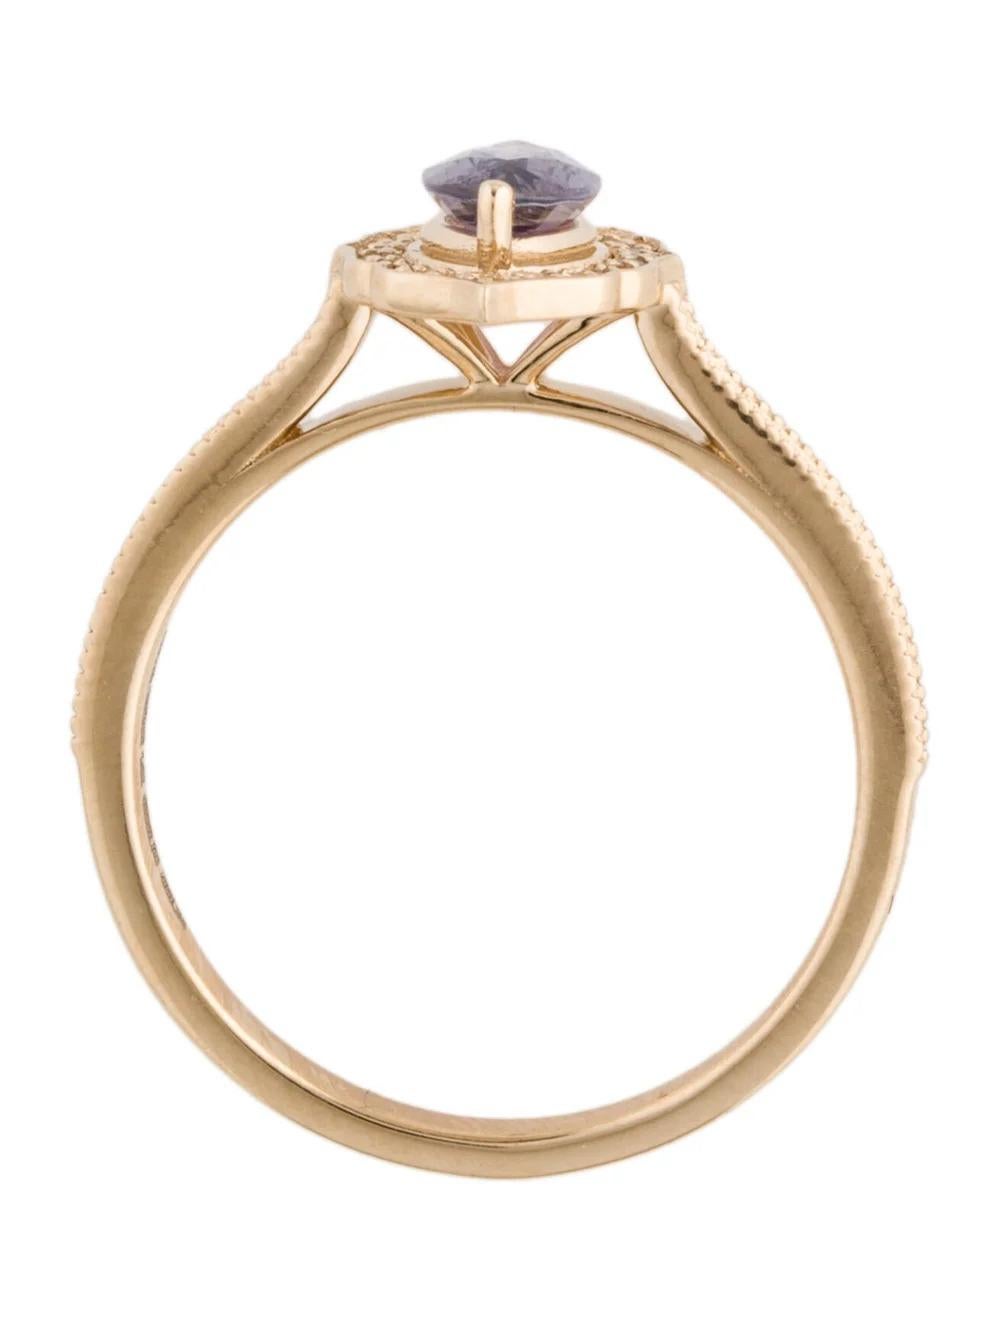 Women's 14K Sapphire & Diamond Cocktail Ring Size 6.75 - Elegant Design, Timeless Beauty For Sale